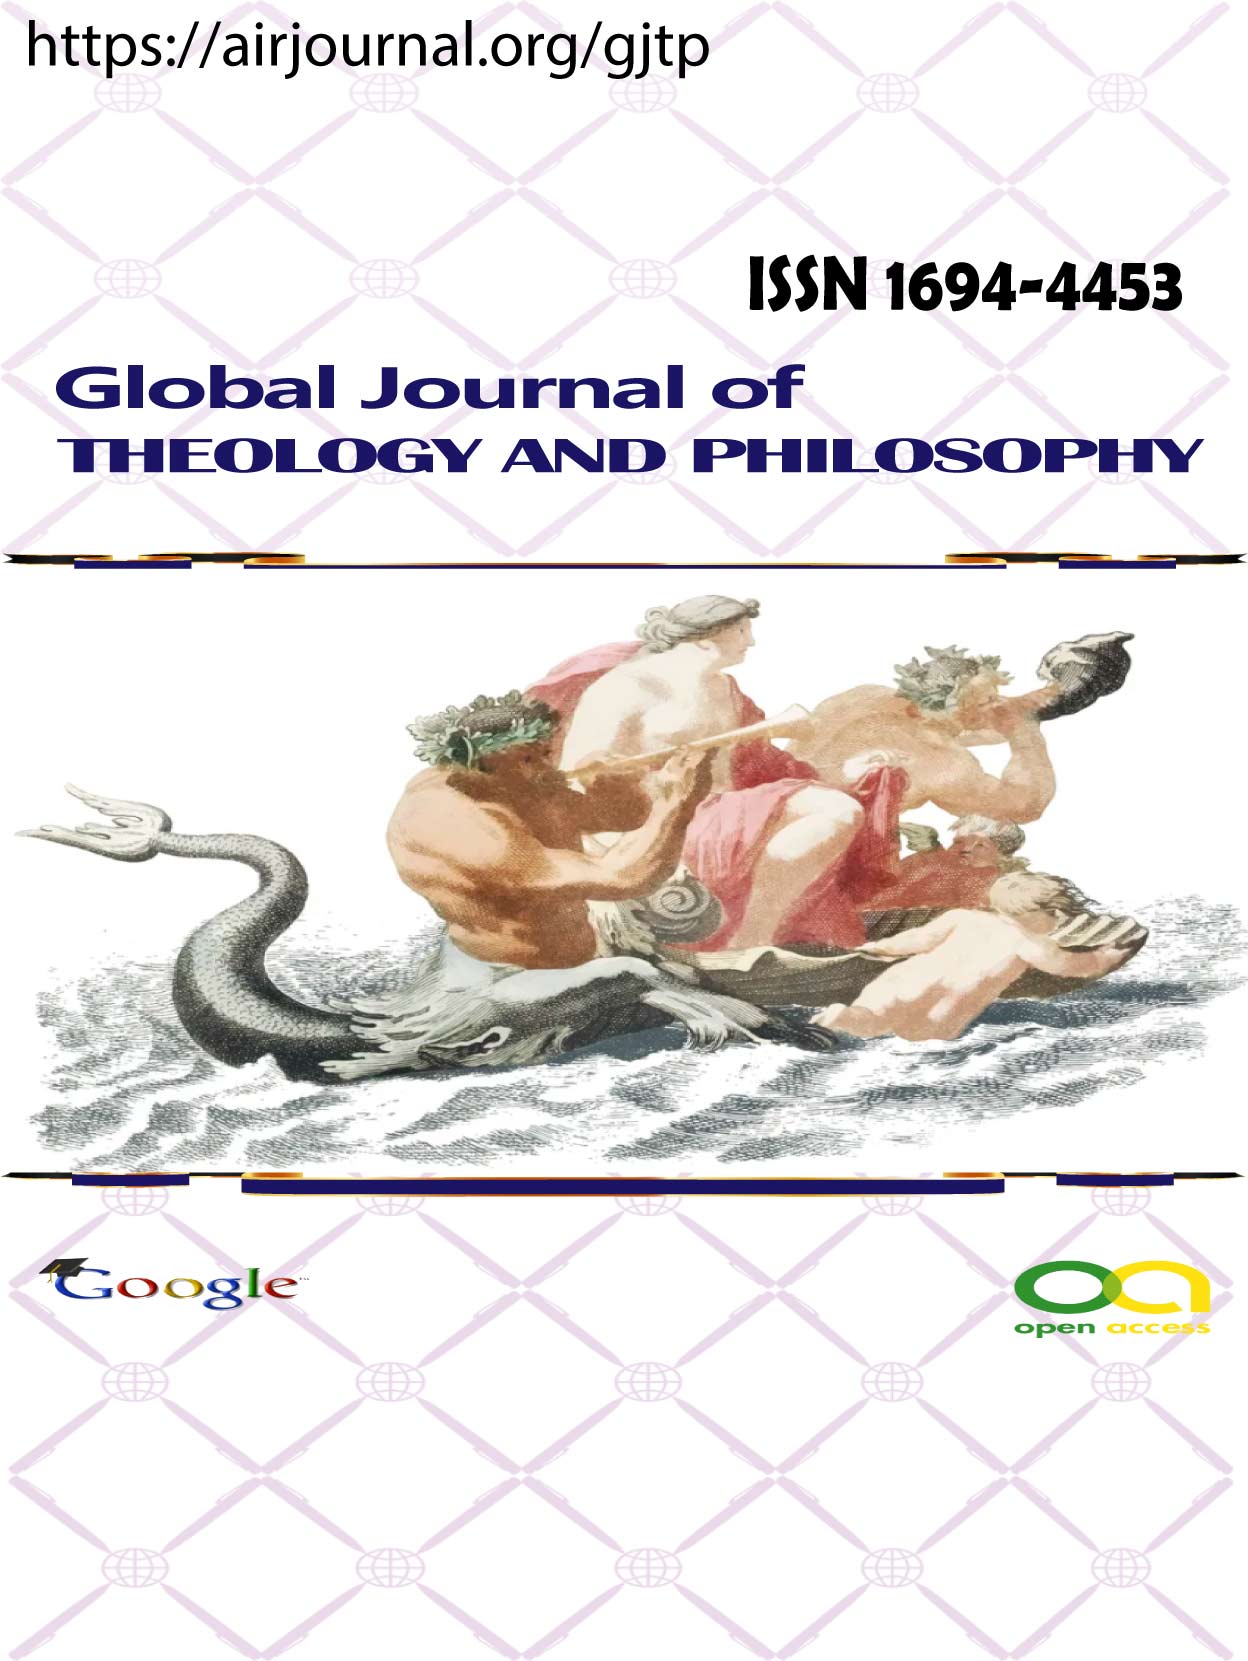 Global Journal of Auditing and Finance (GJA